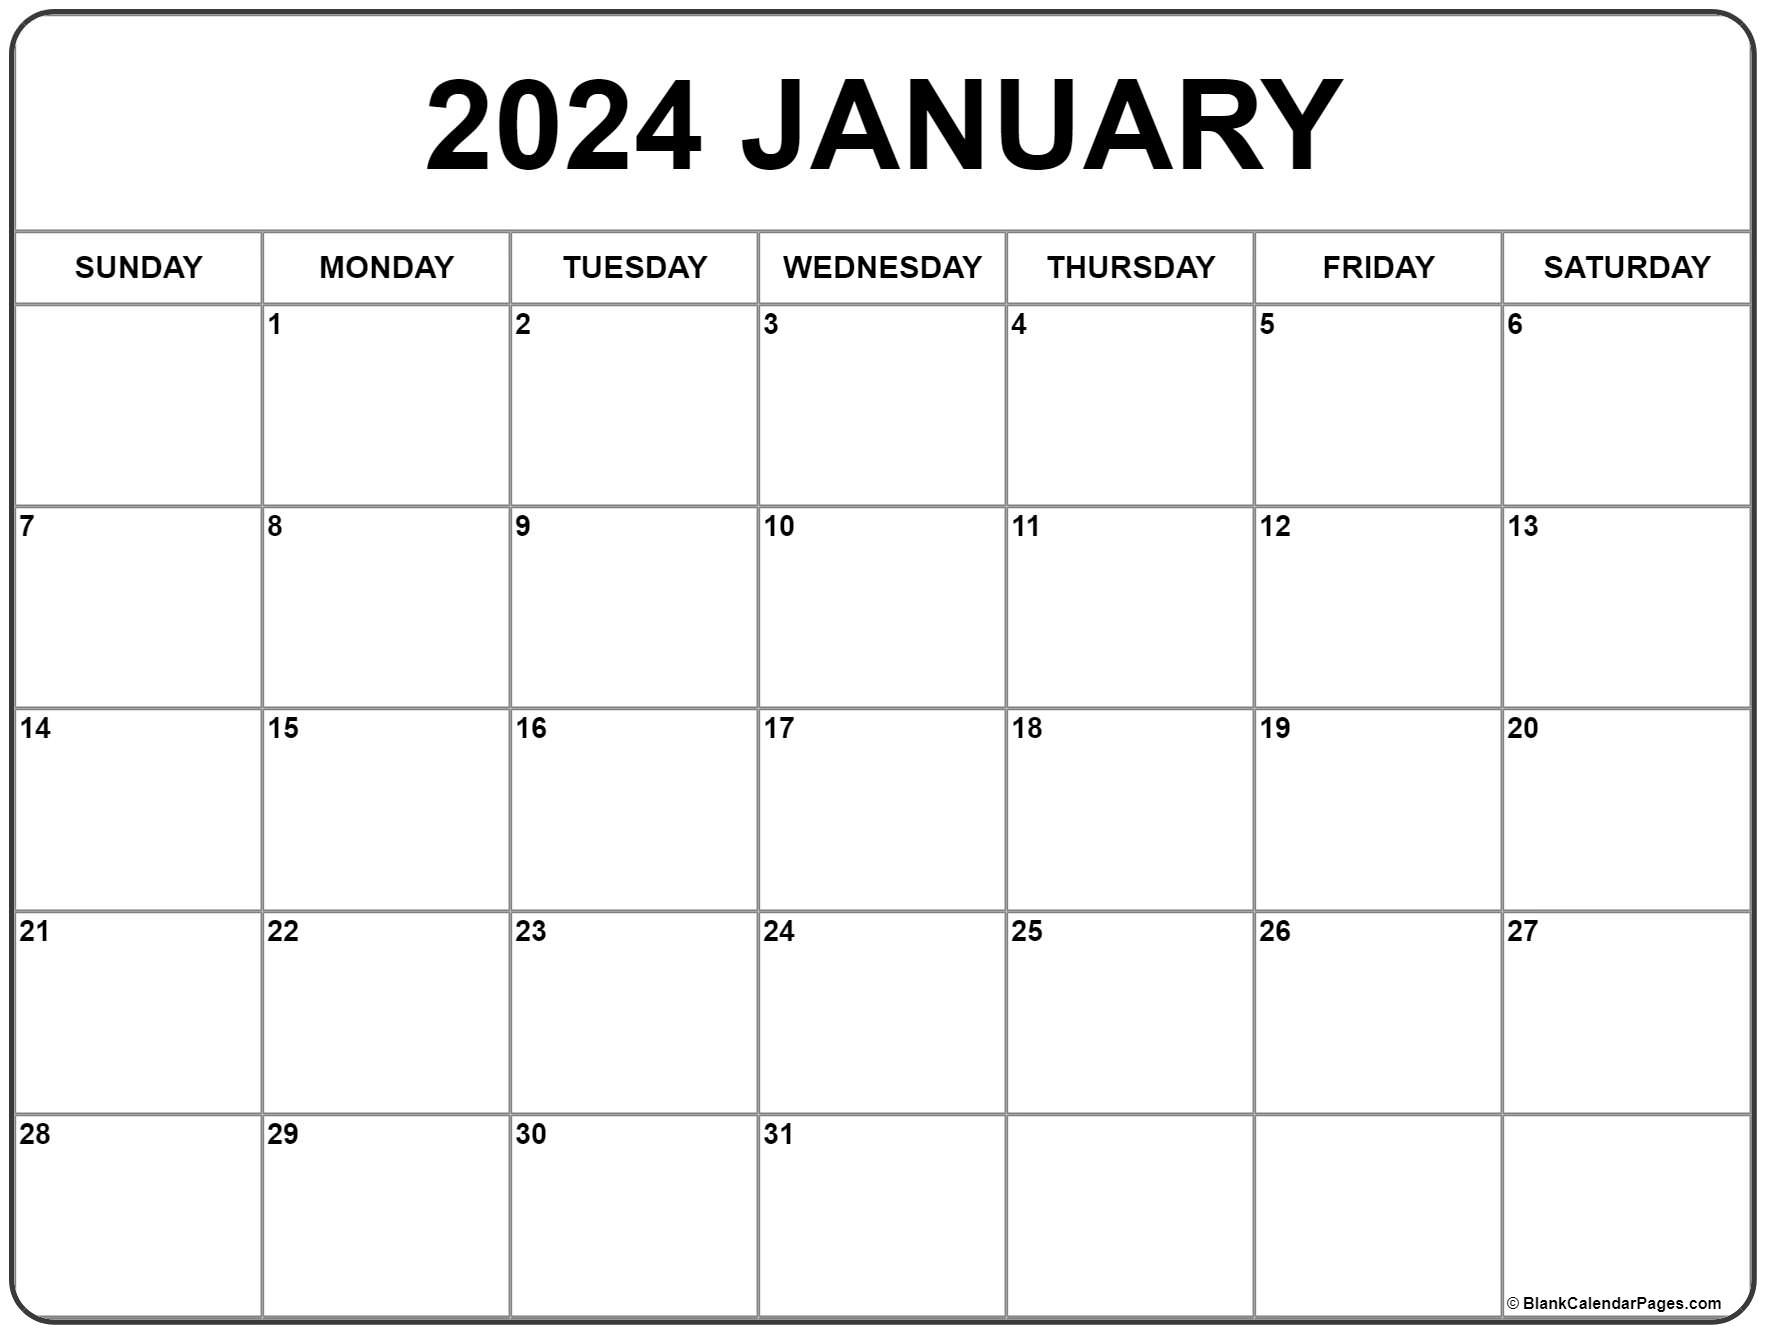 January 2024 Calendar | Free Printable Calendar for Free Jan 2024 Calendar Printable